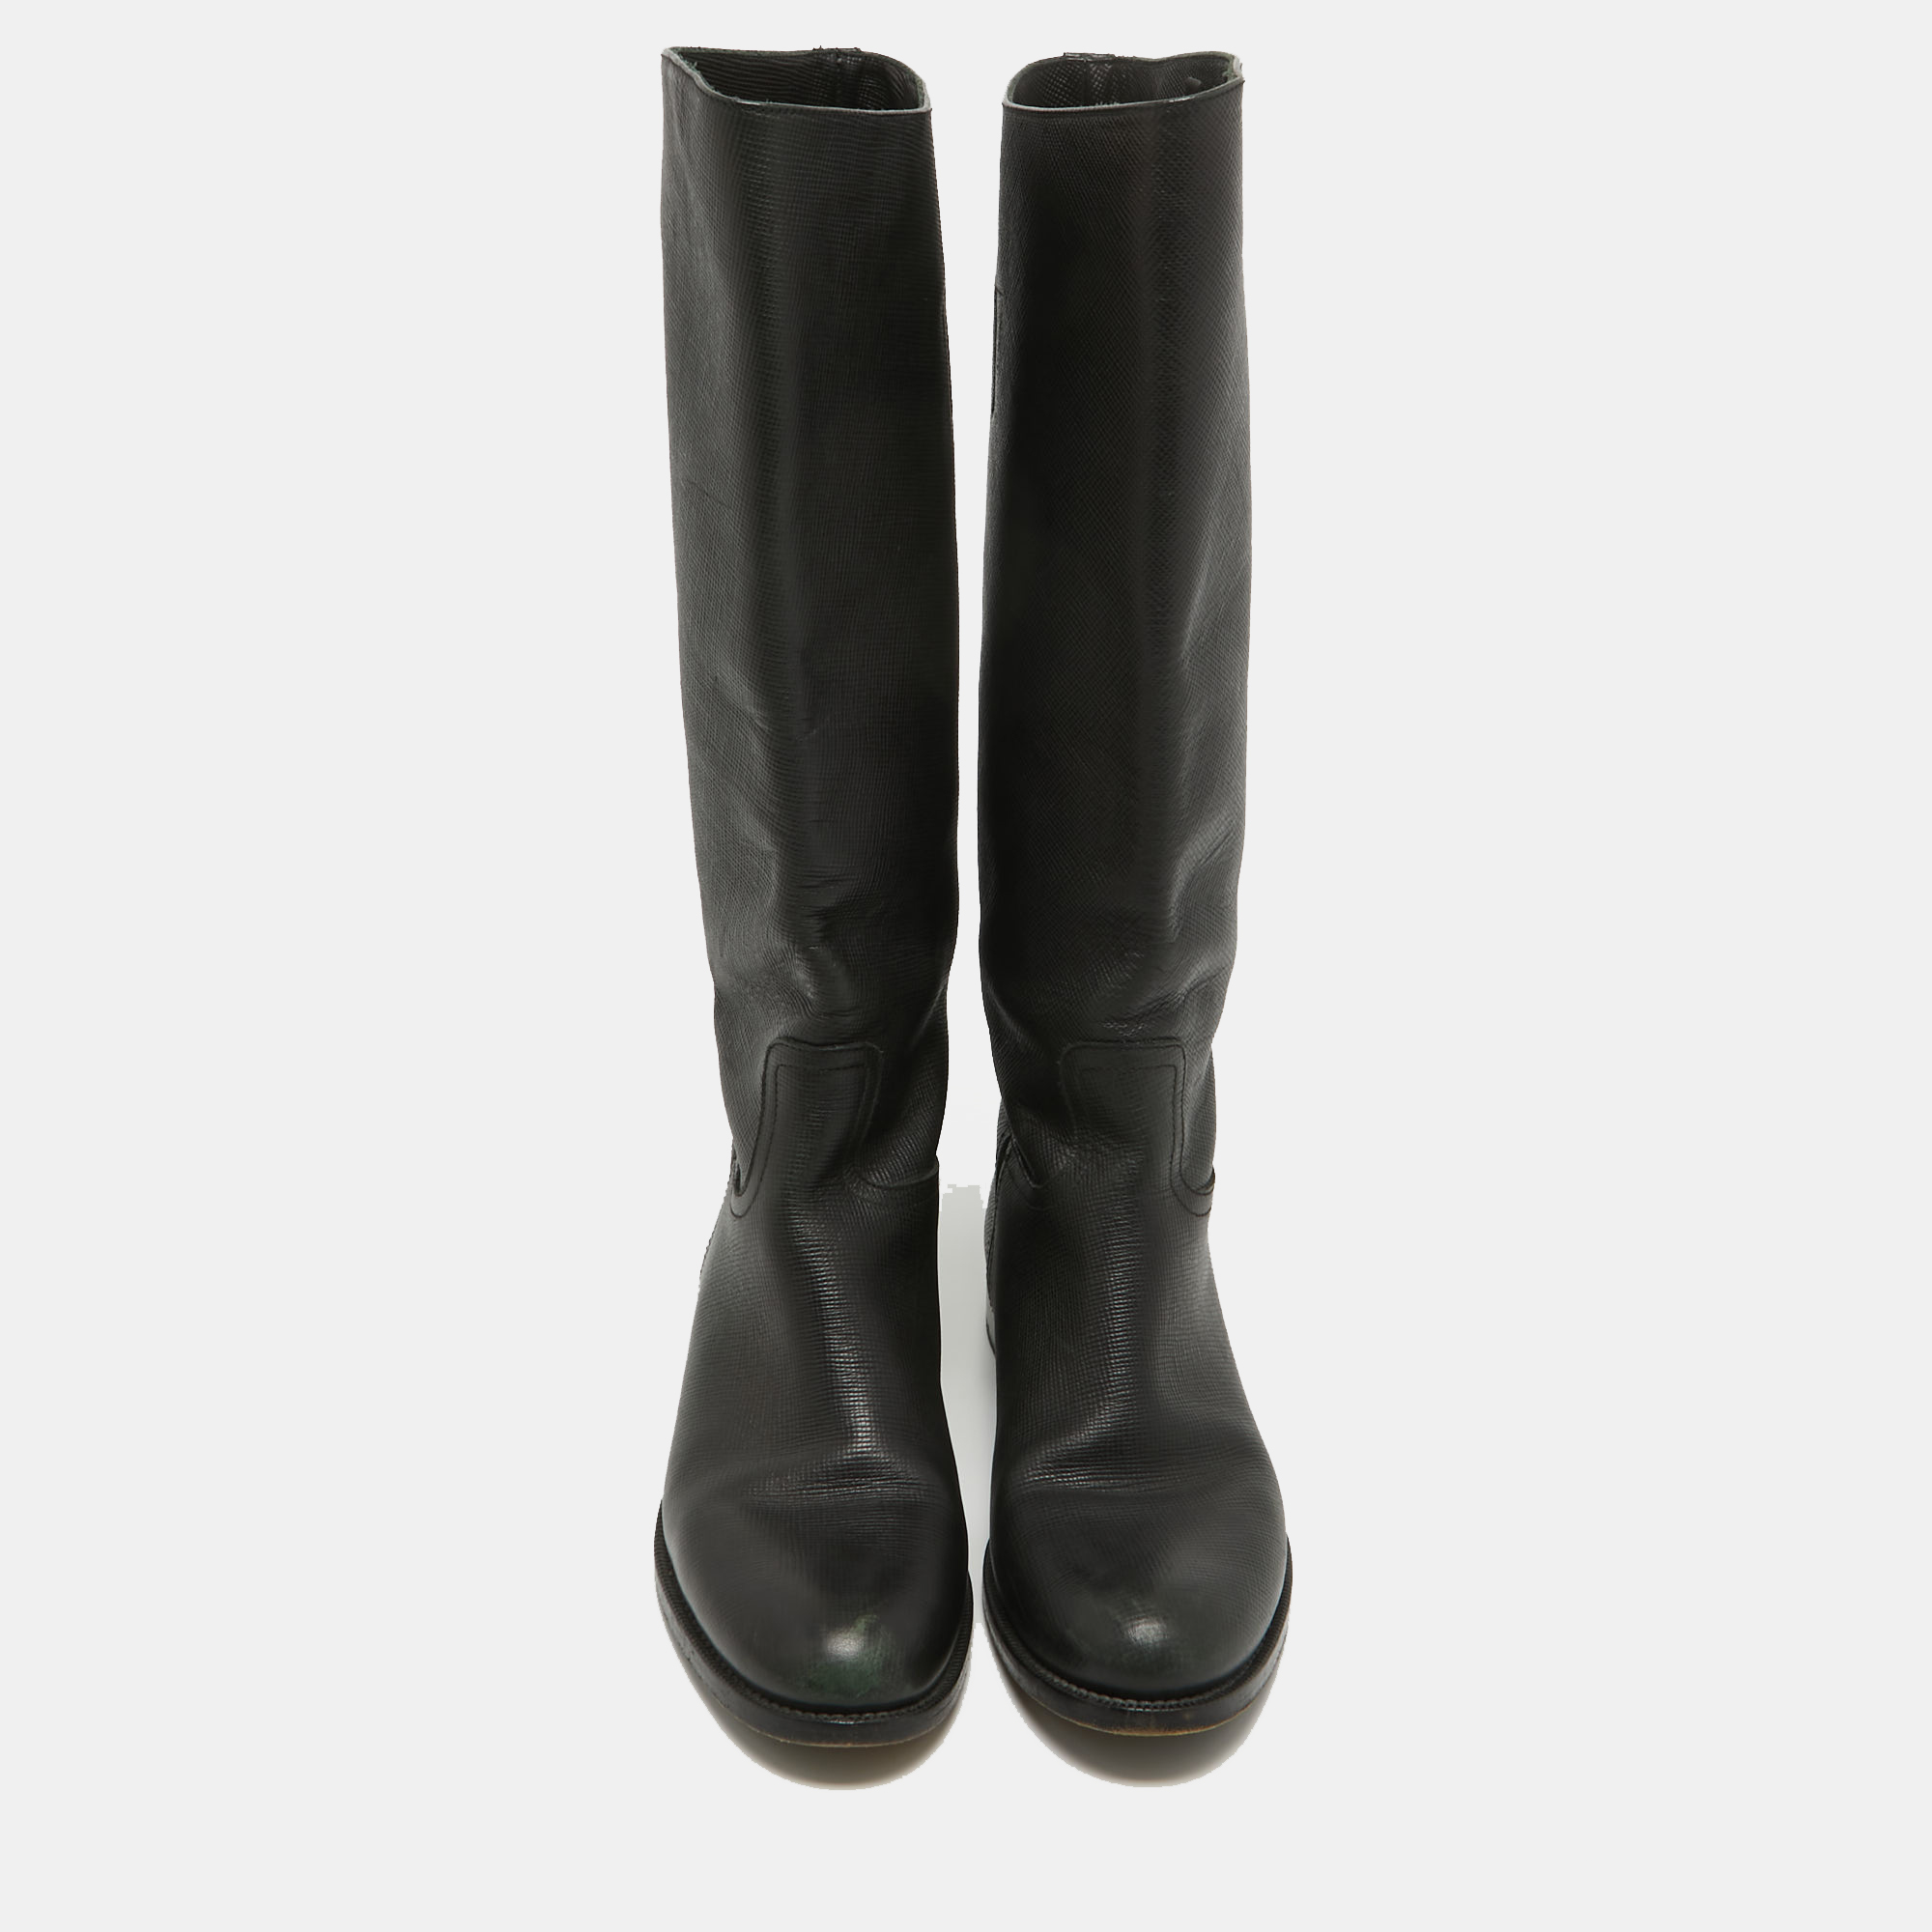 Prada Black Leather Knee Length Boots Size 39